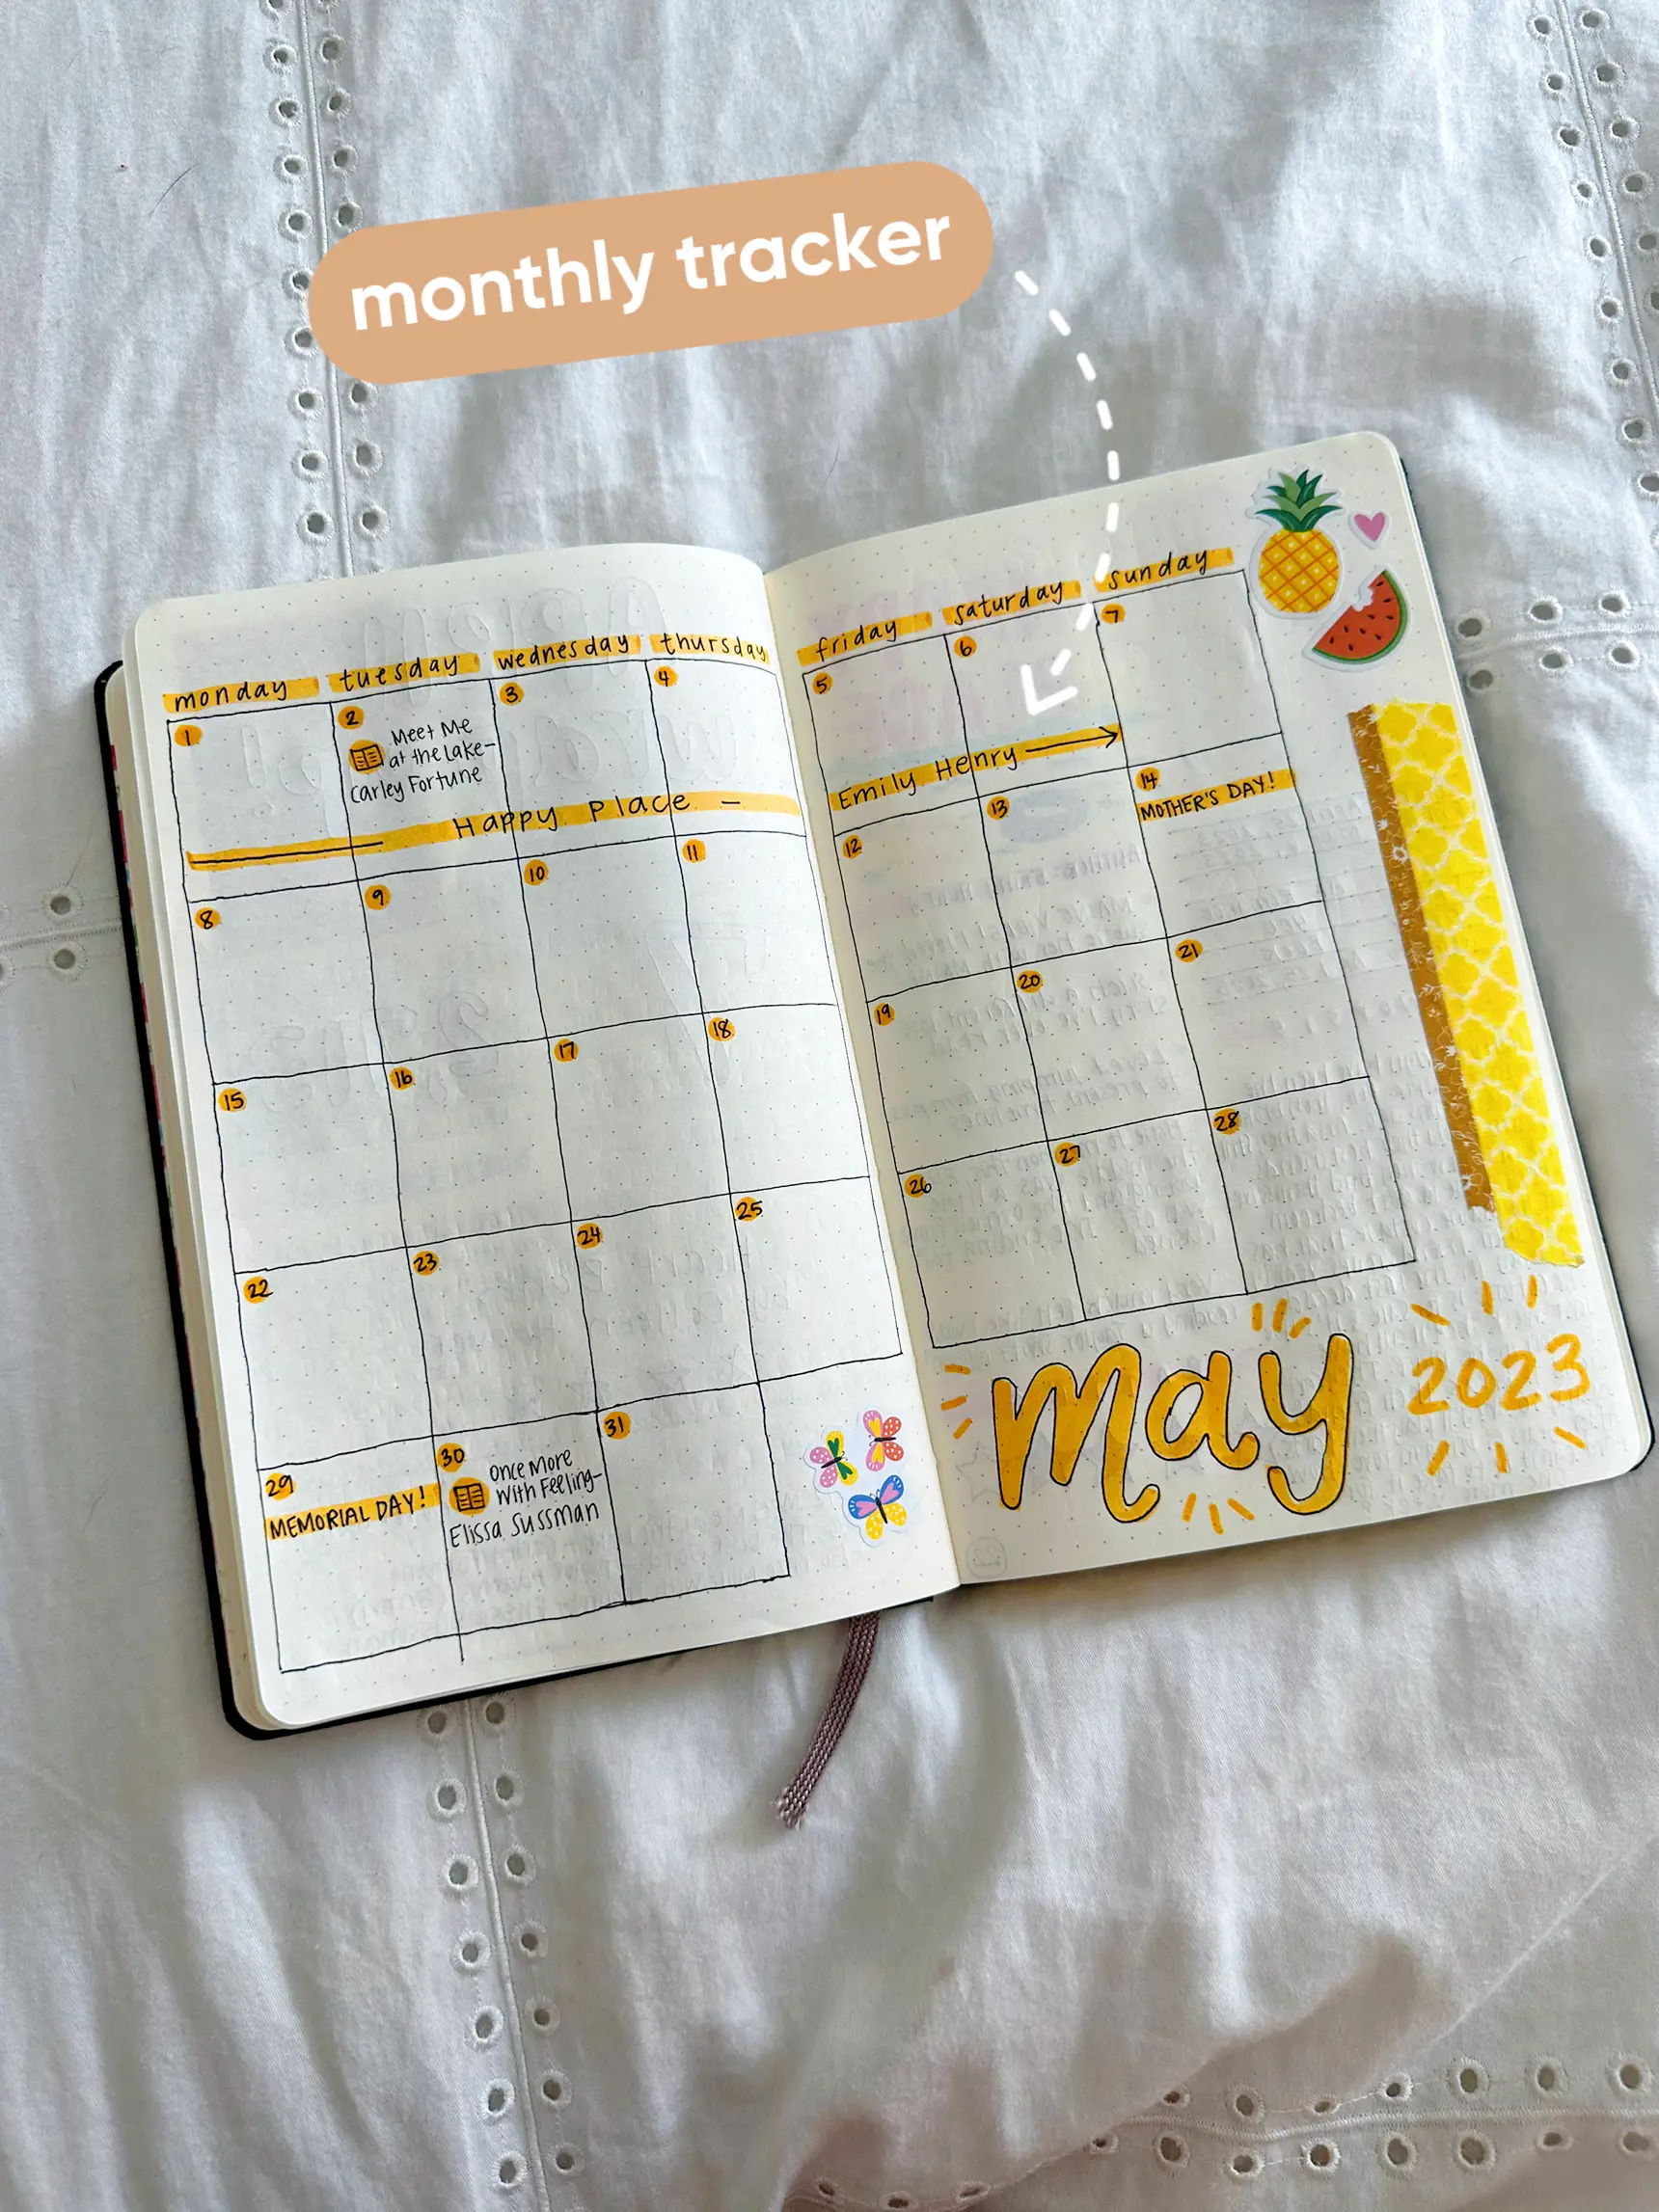  A book with a calendar